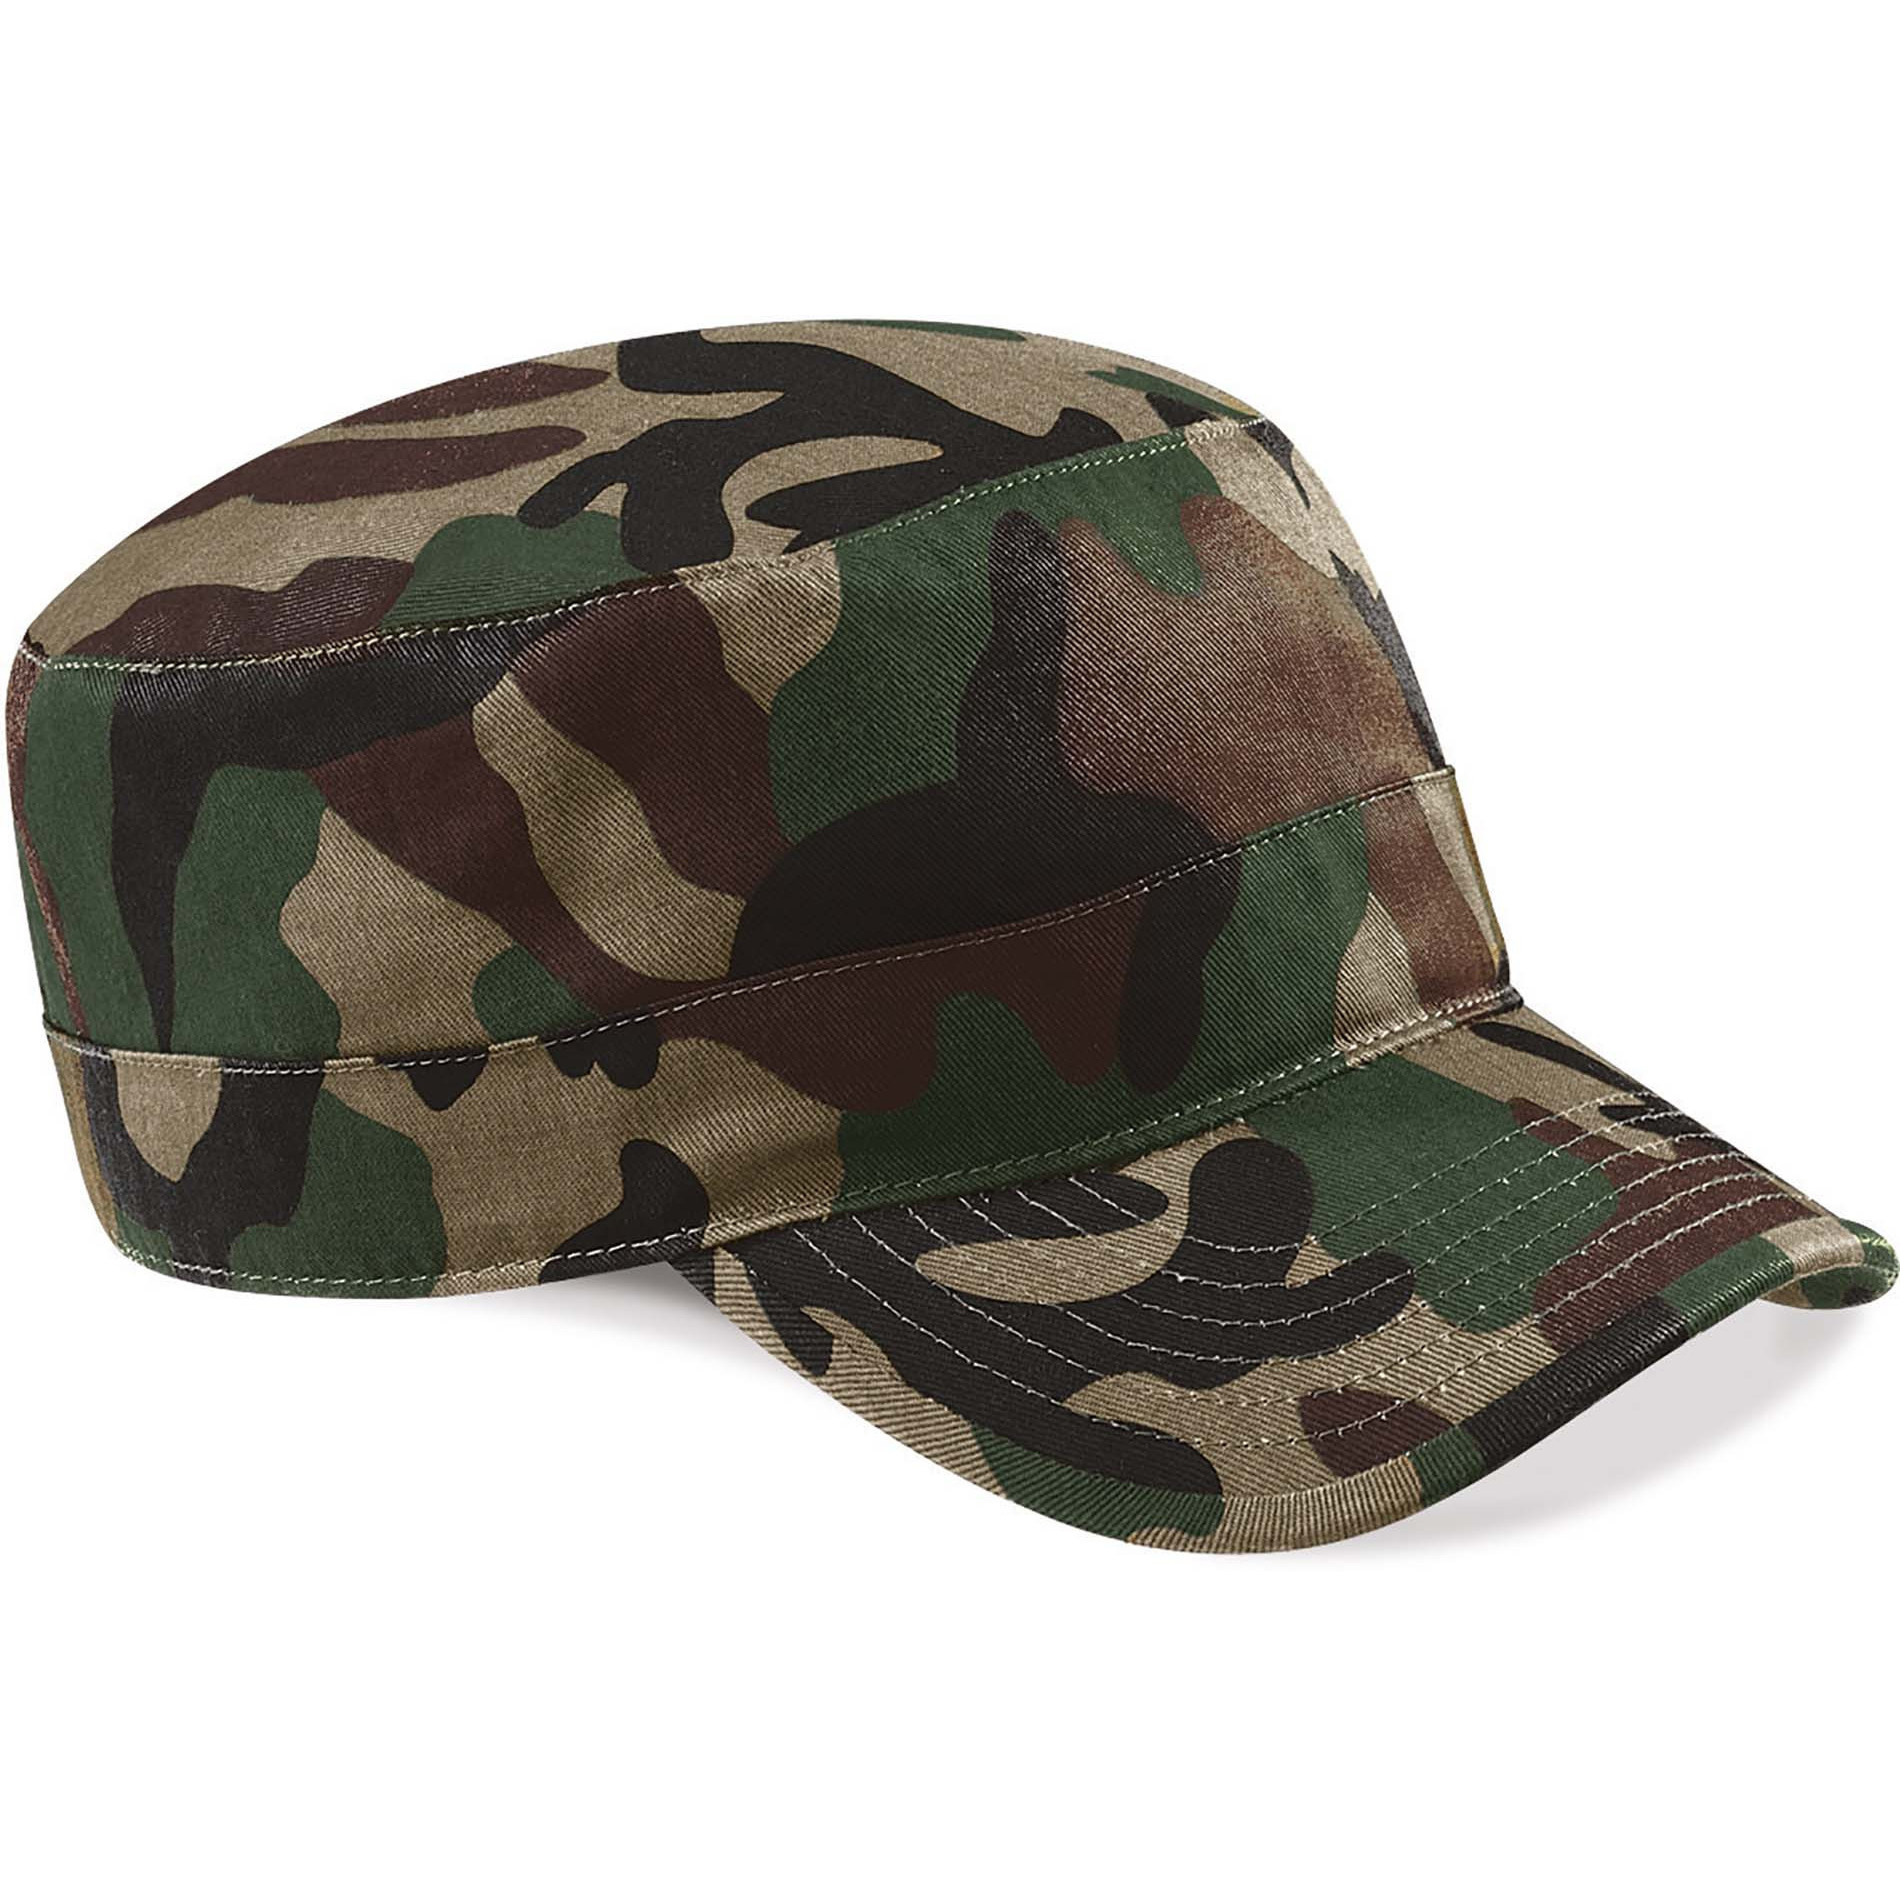 Beechfield army cap